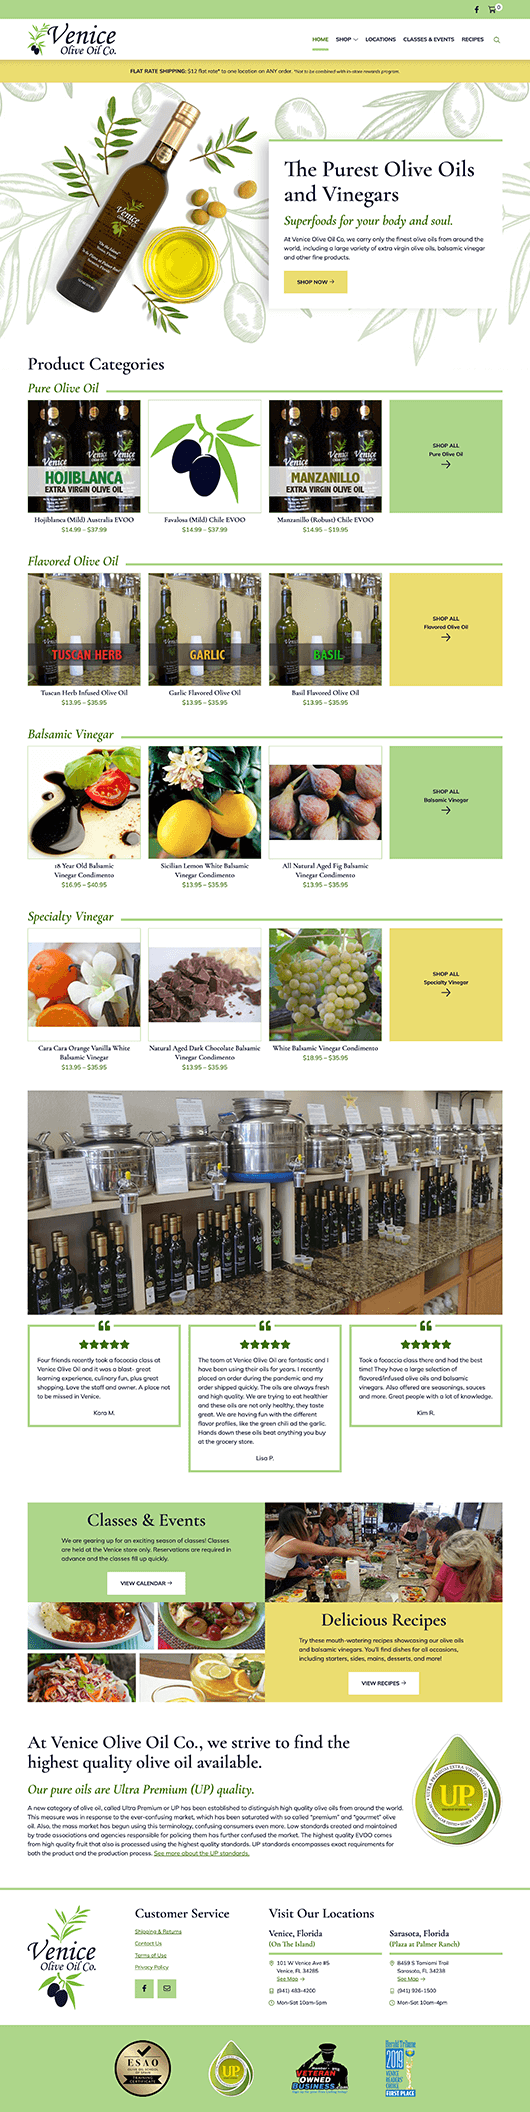 Venice Olive Oil Company Website Design